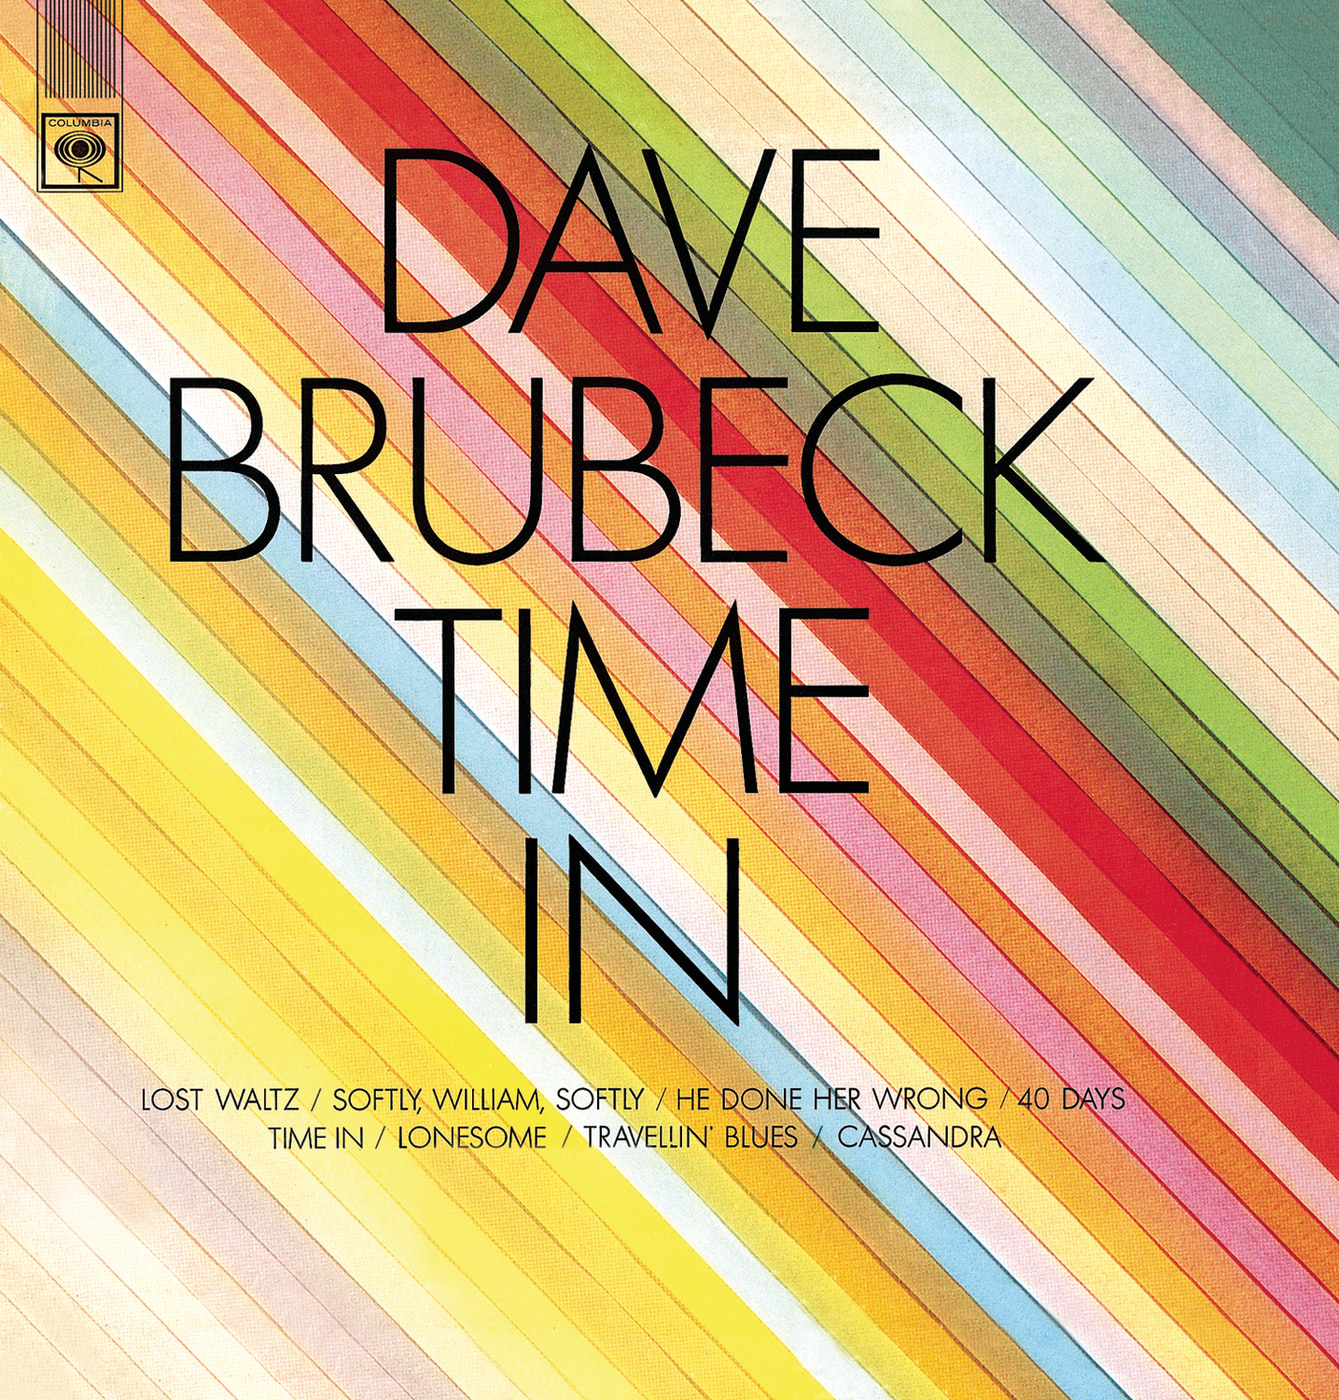 The Dave Brubeck Quartet-Blue Shadows in the Street